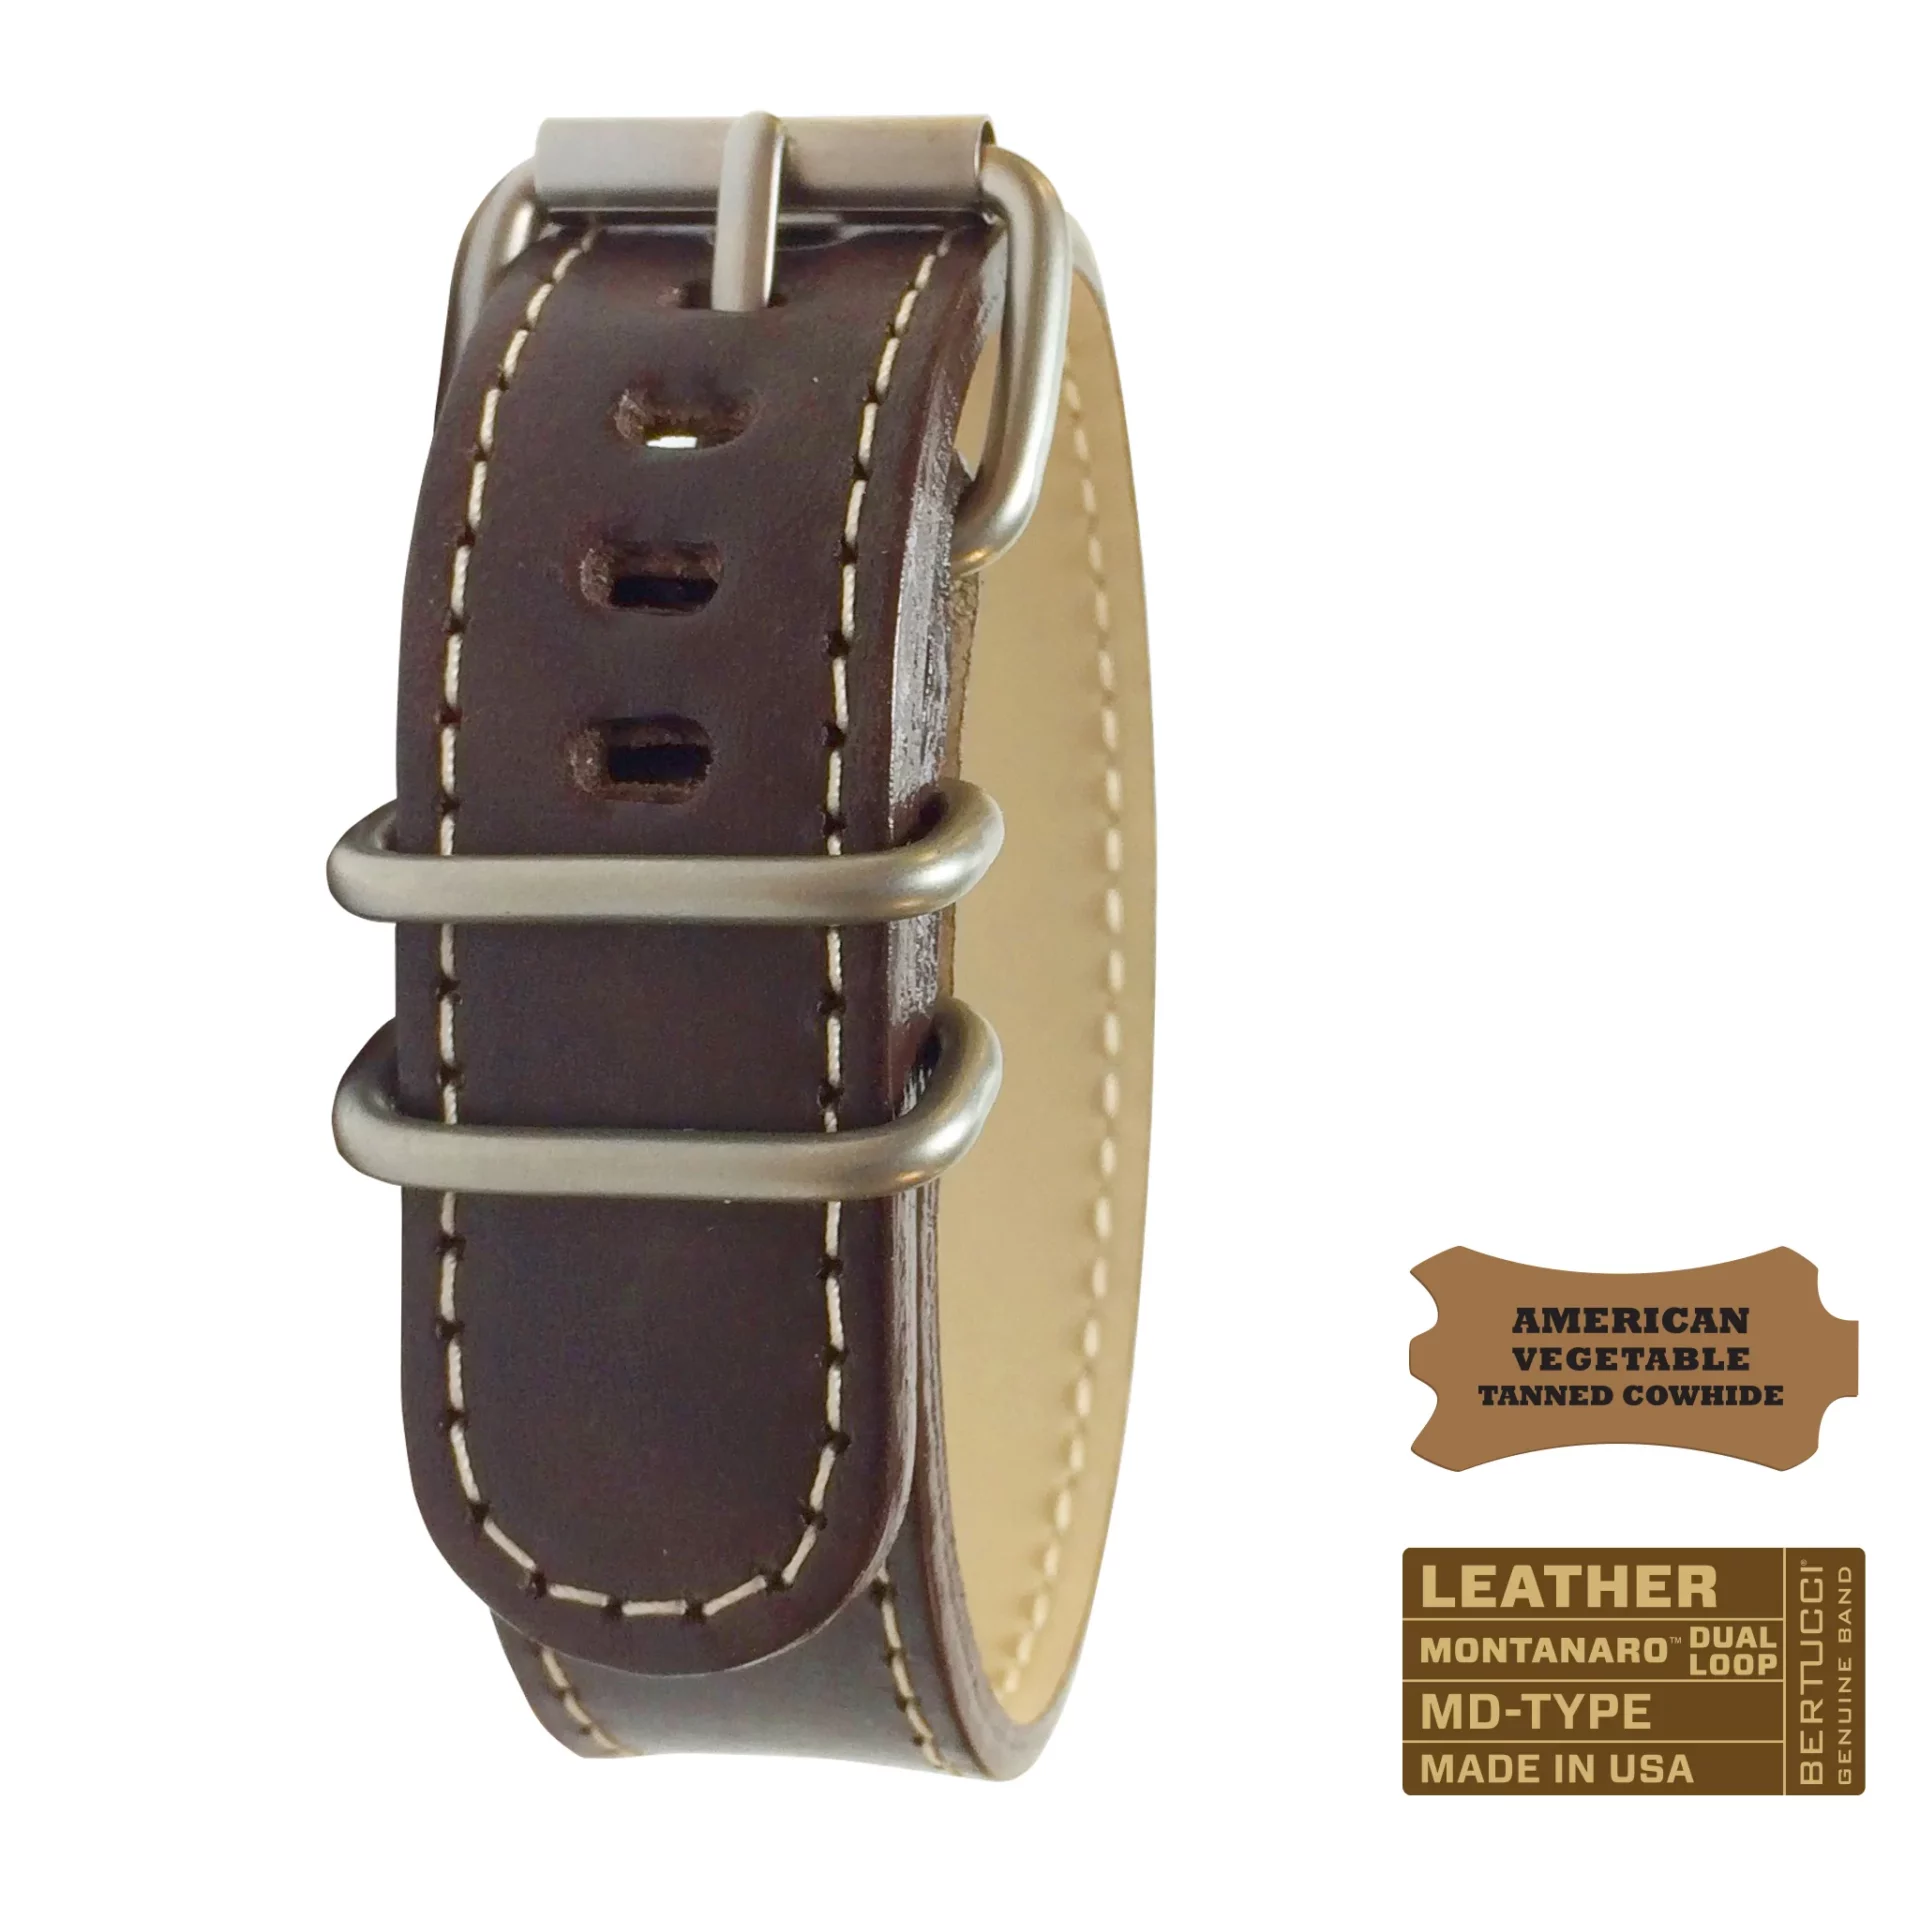 Bertucci leather band #239MD - Alpina Brown™ w/ matte hardware